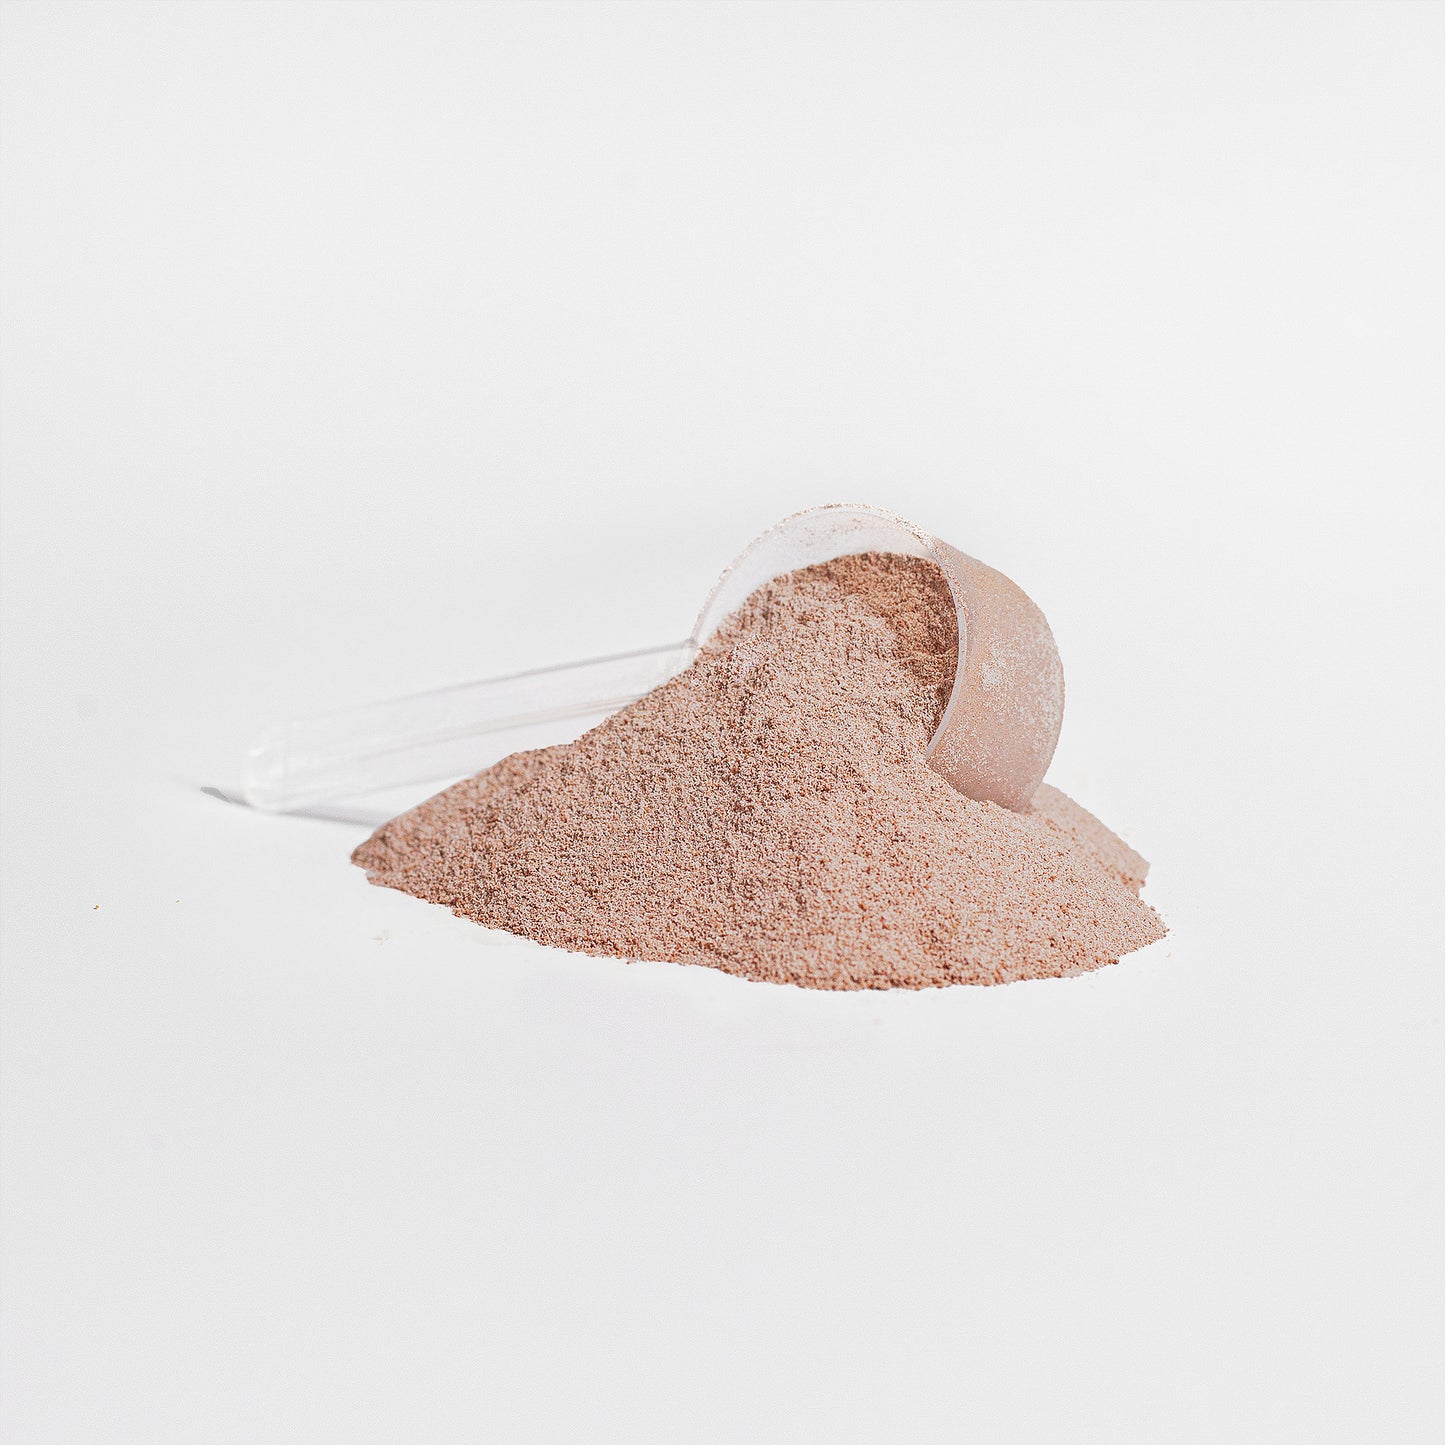 Glue - Grass-Fed Collagen Peptides (Chocolate)